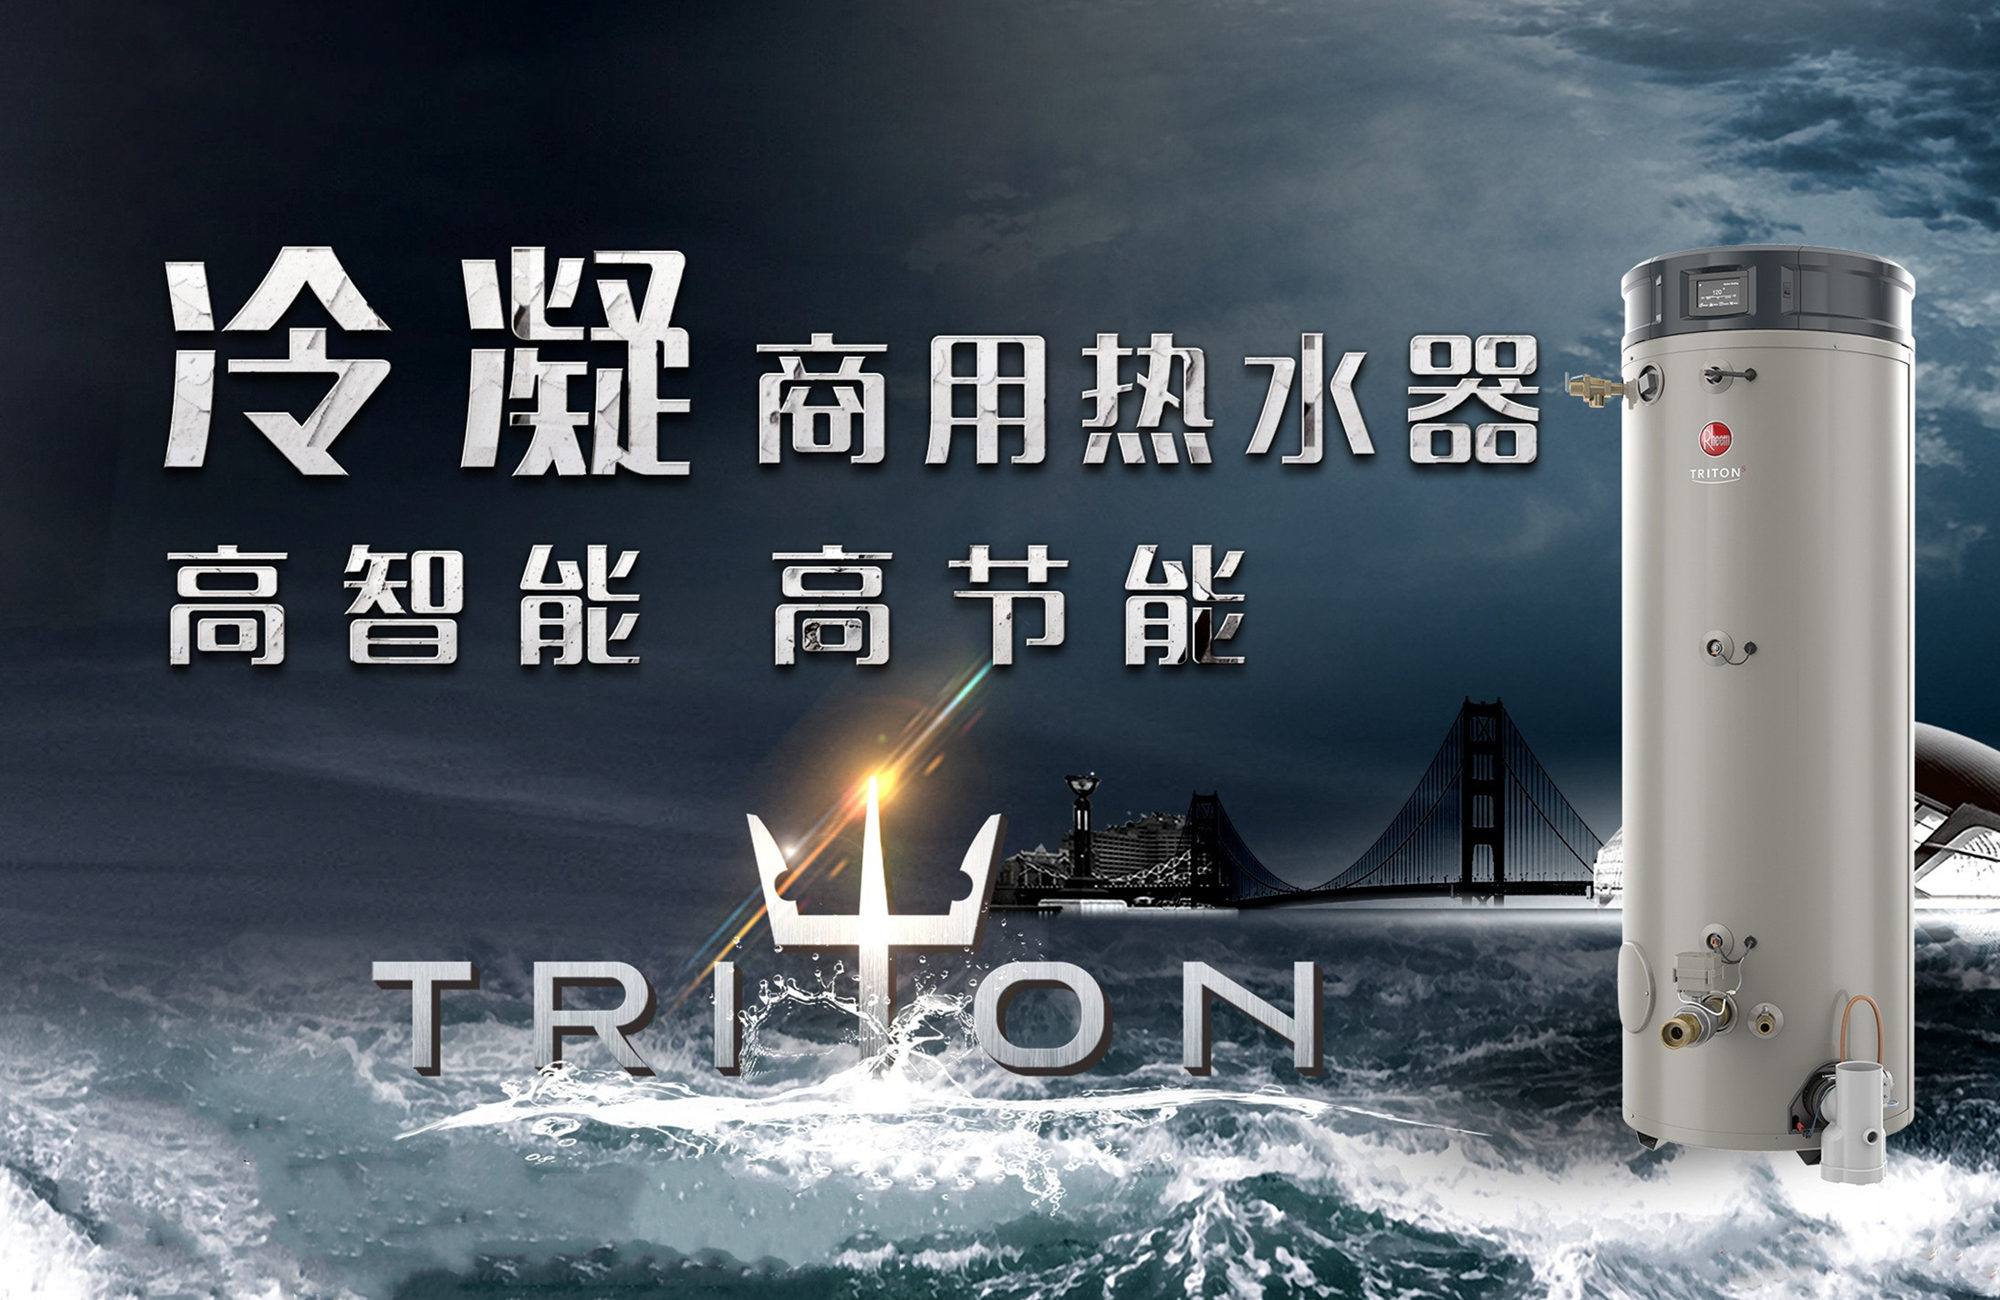 Triton-™海报-1_副本_副本.jpg